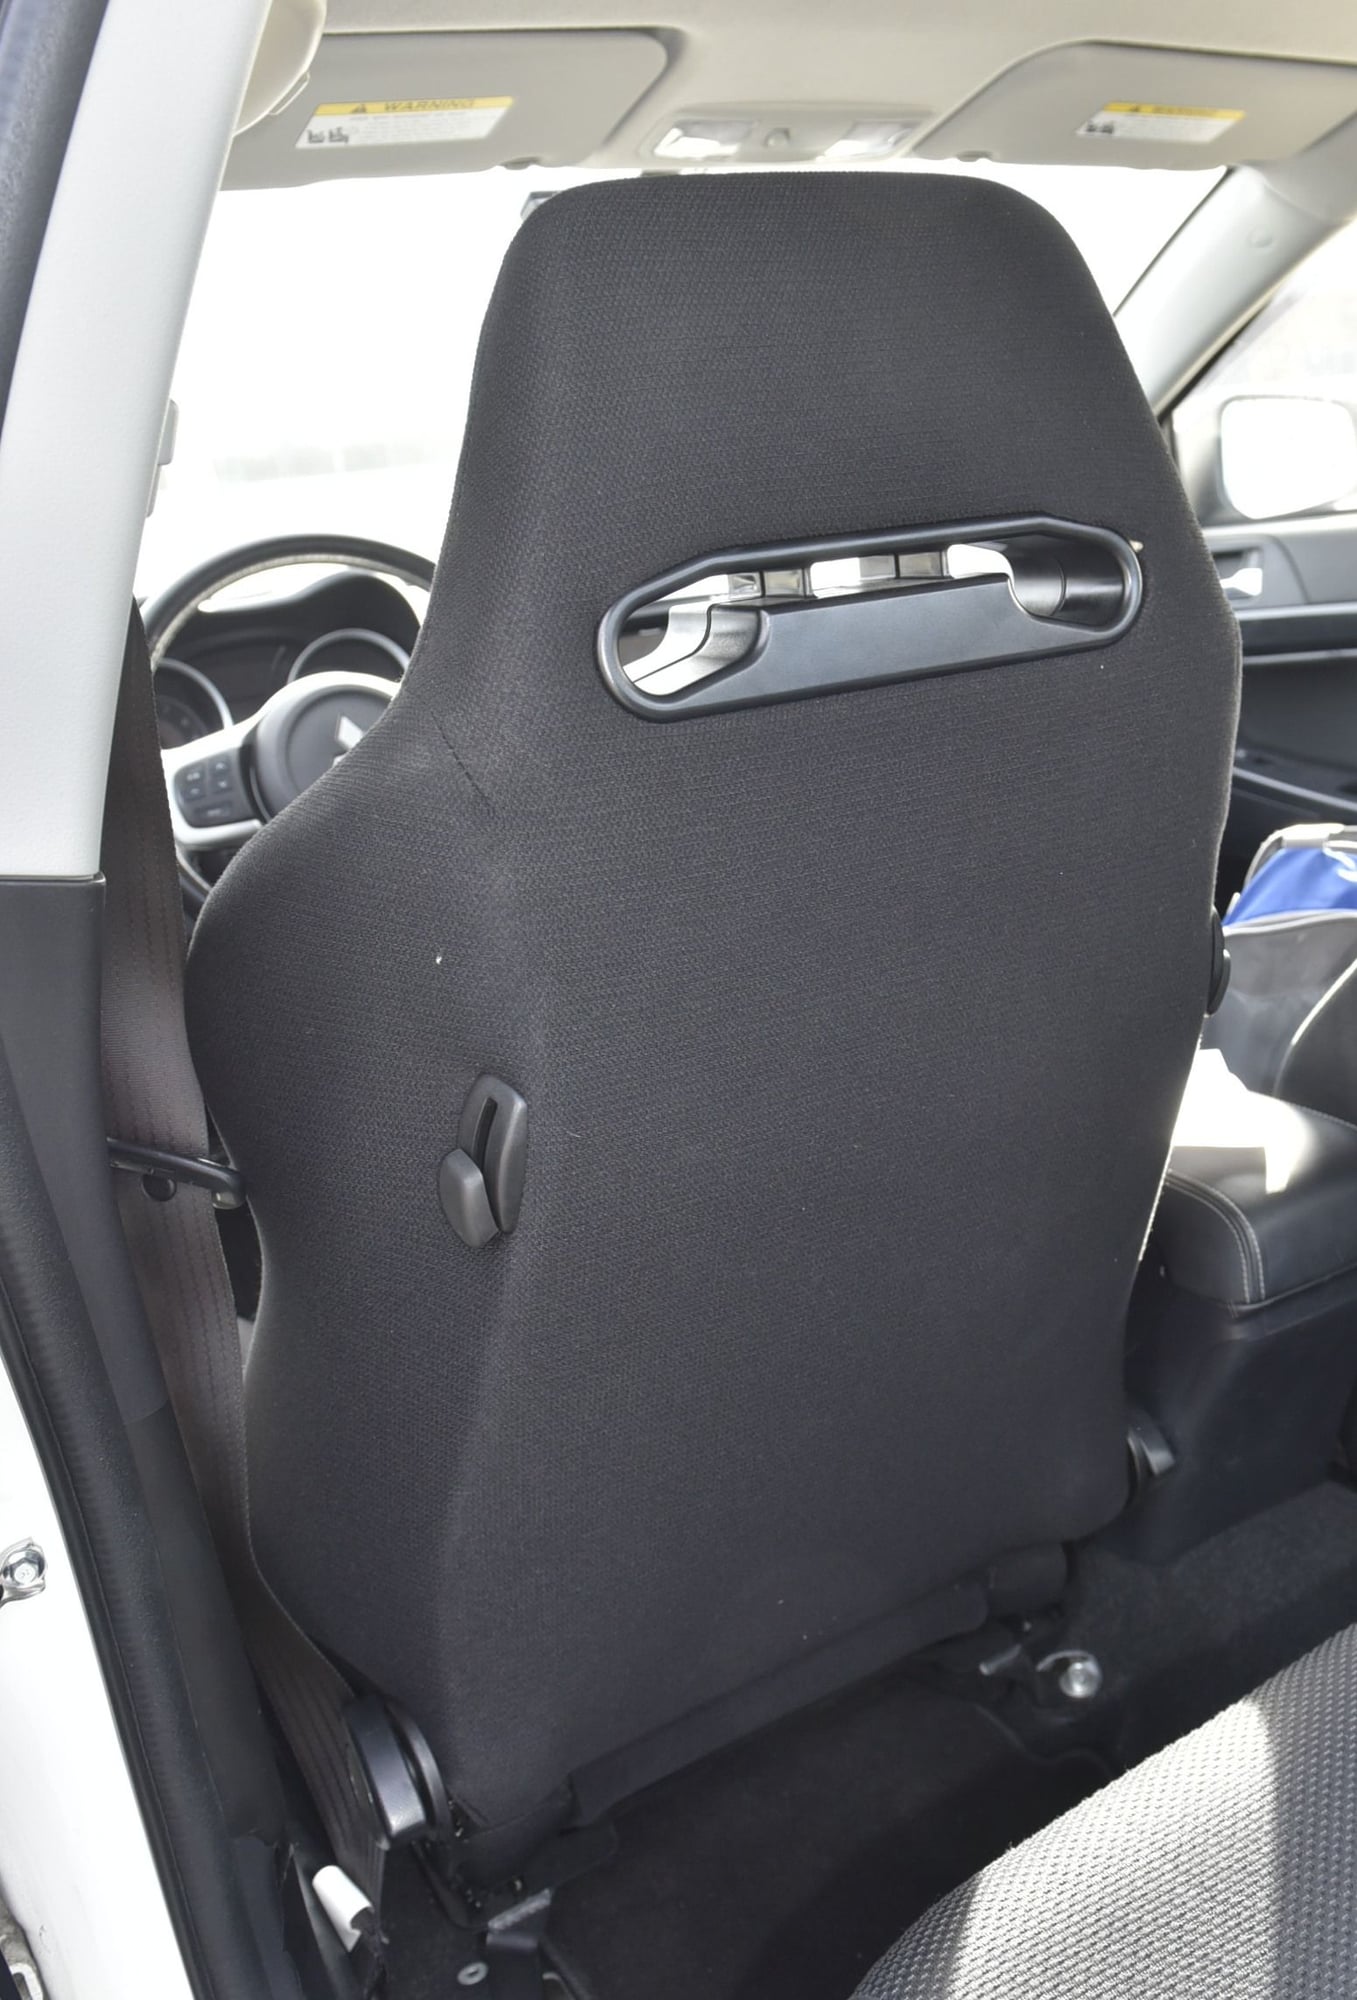 Interior/Upholstery - Recaro Speed and double locking sliders - Used - 2008 to 2015 Mitsubishi Lancer Evolution - Brooklyn, NY 11223, United States